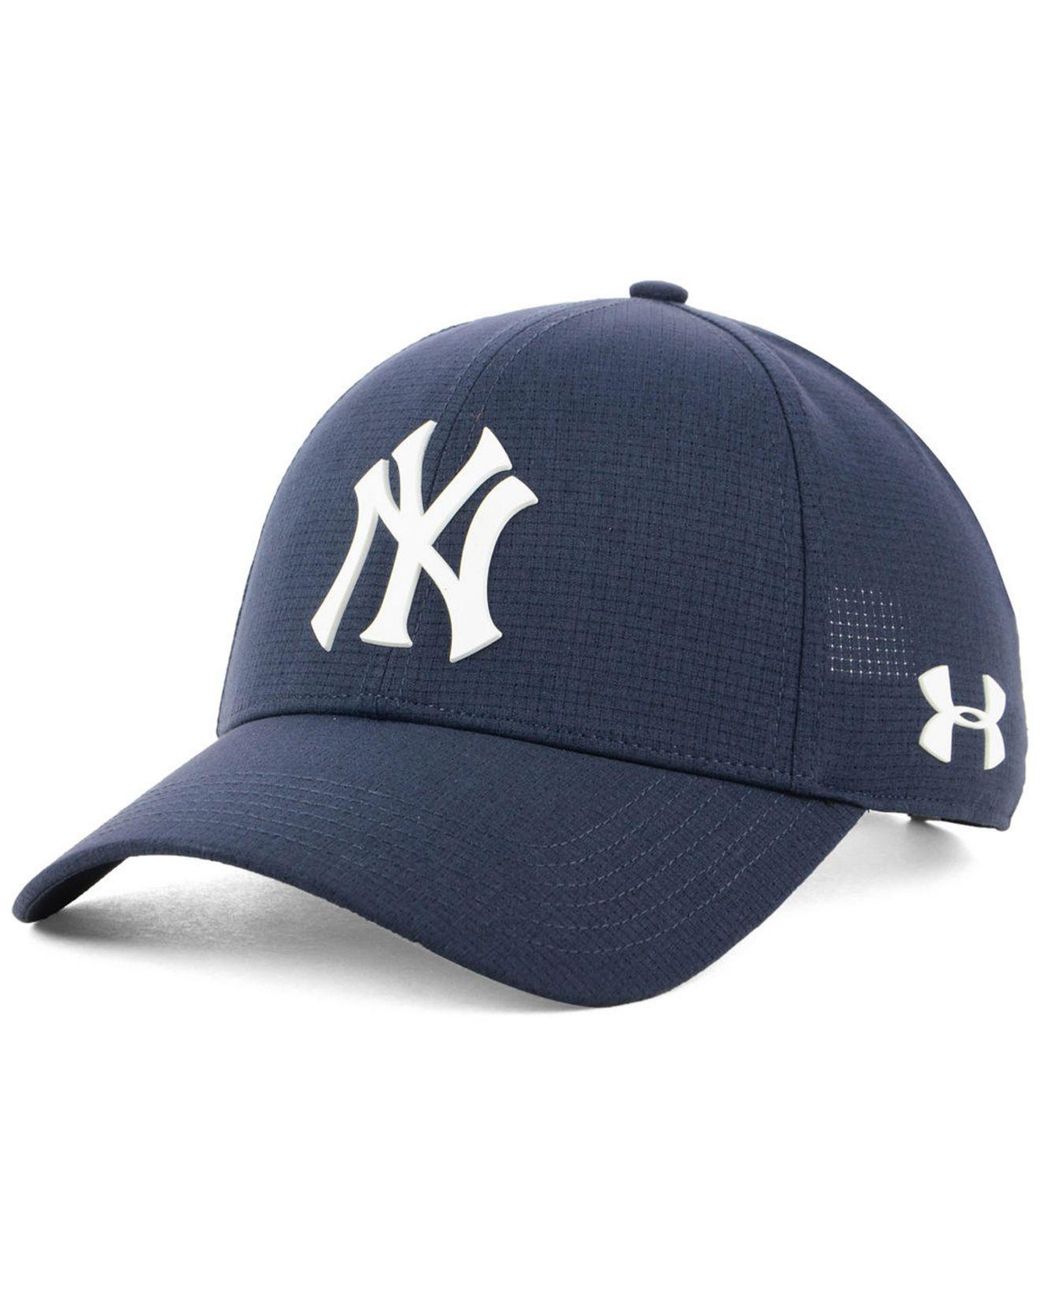 https://cdna.lystit.com/1040/1300/n/photos/macys/5661c288/under-armour-Navy-New-York-Yankees-Driver-Cap.jpeg